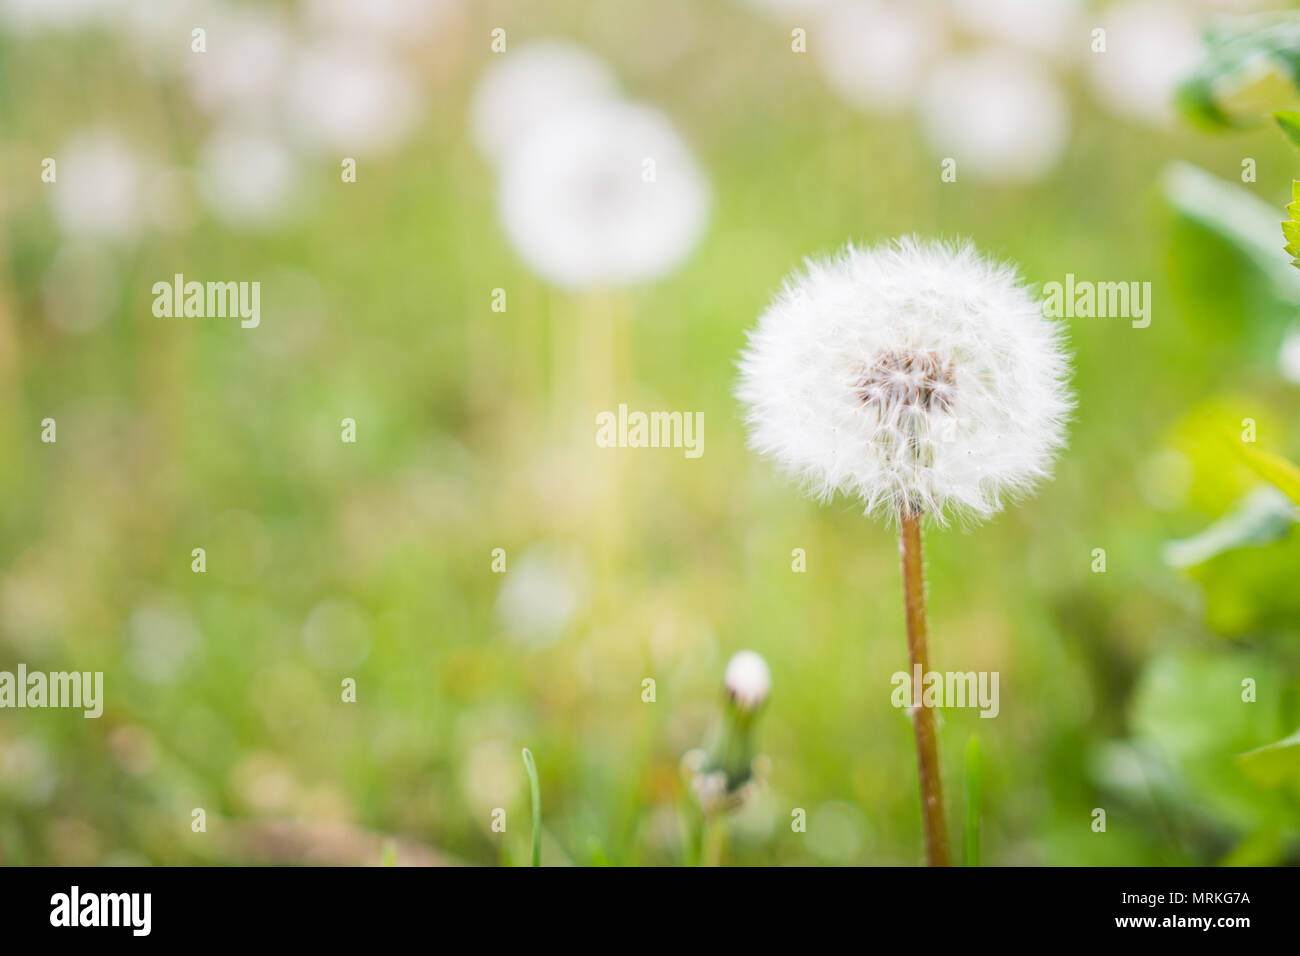 White seeds of dandelion weeds Stock Photo